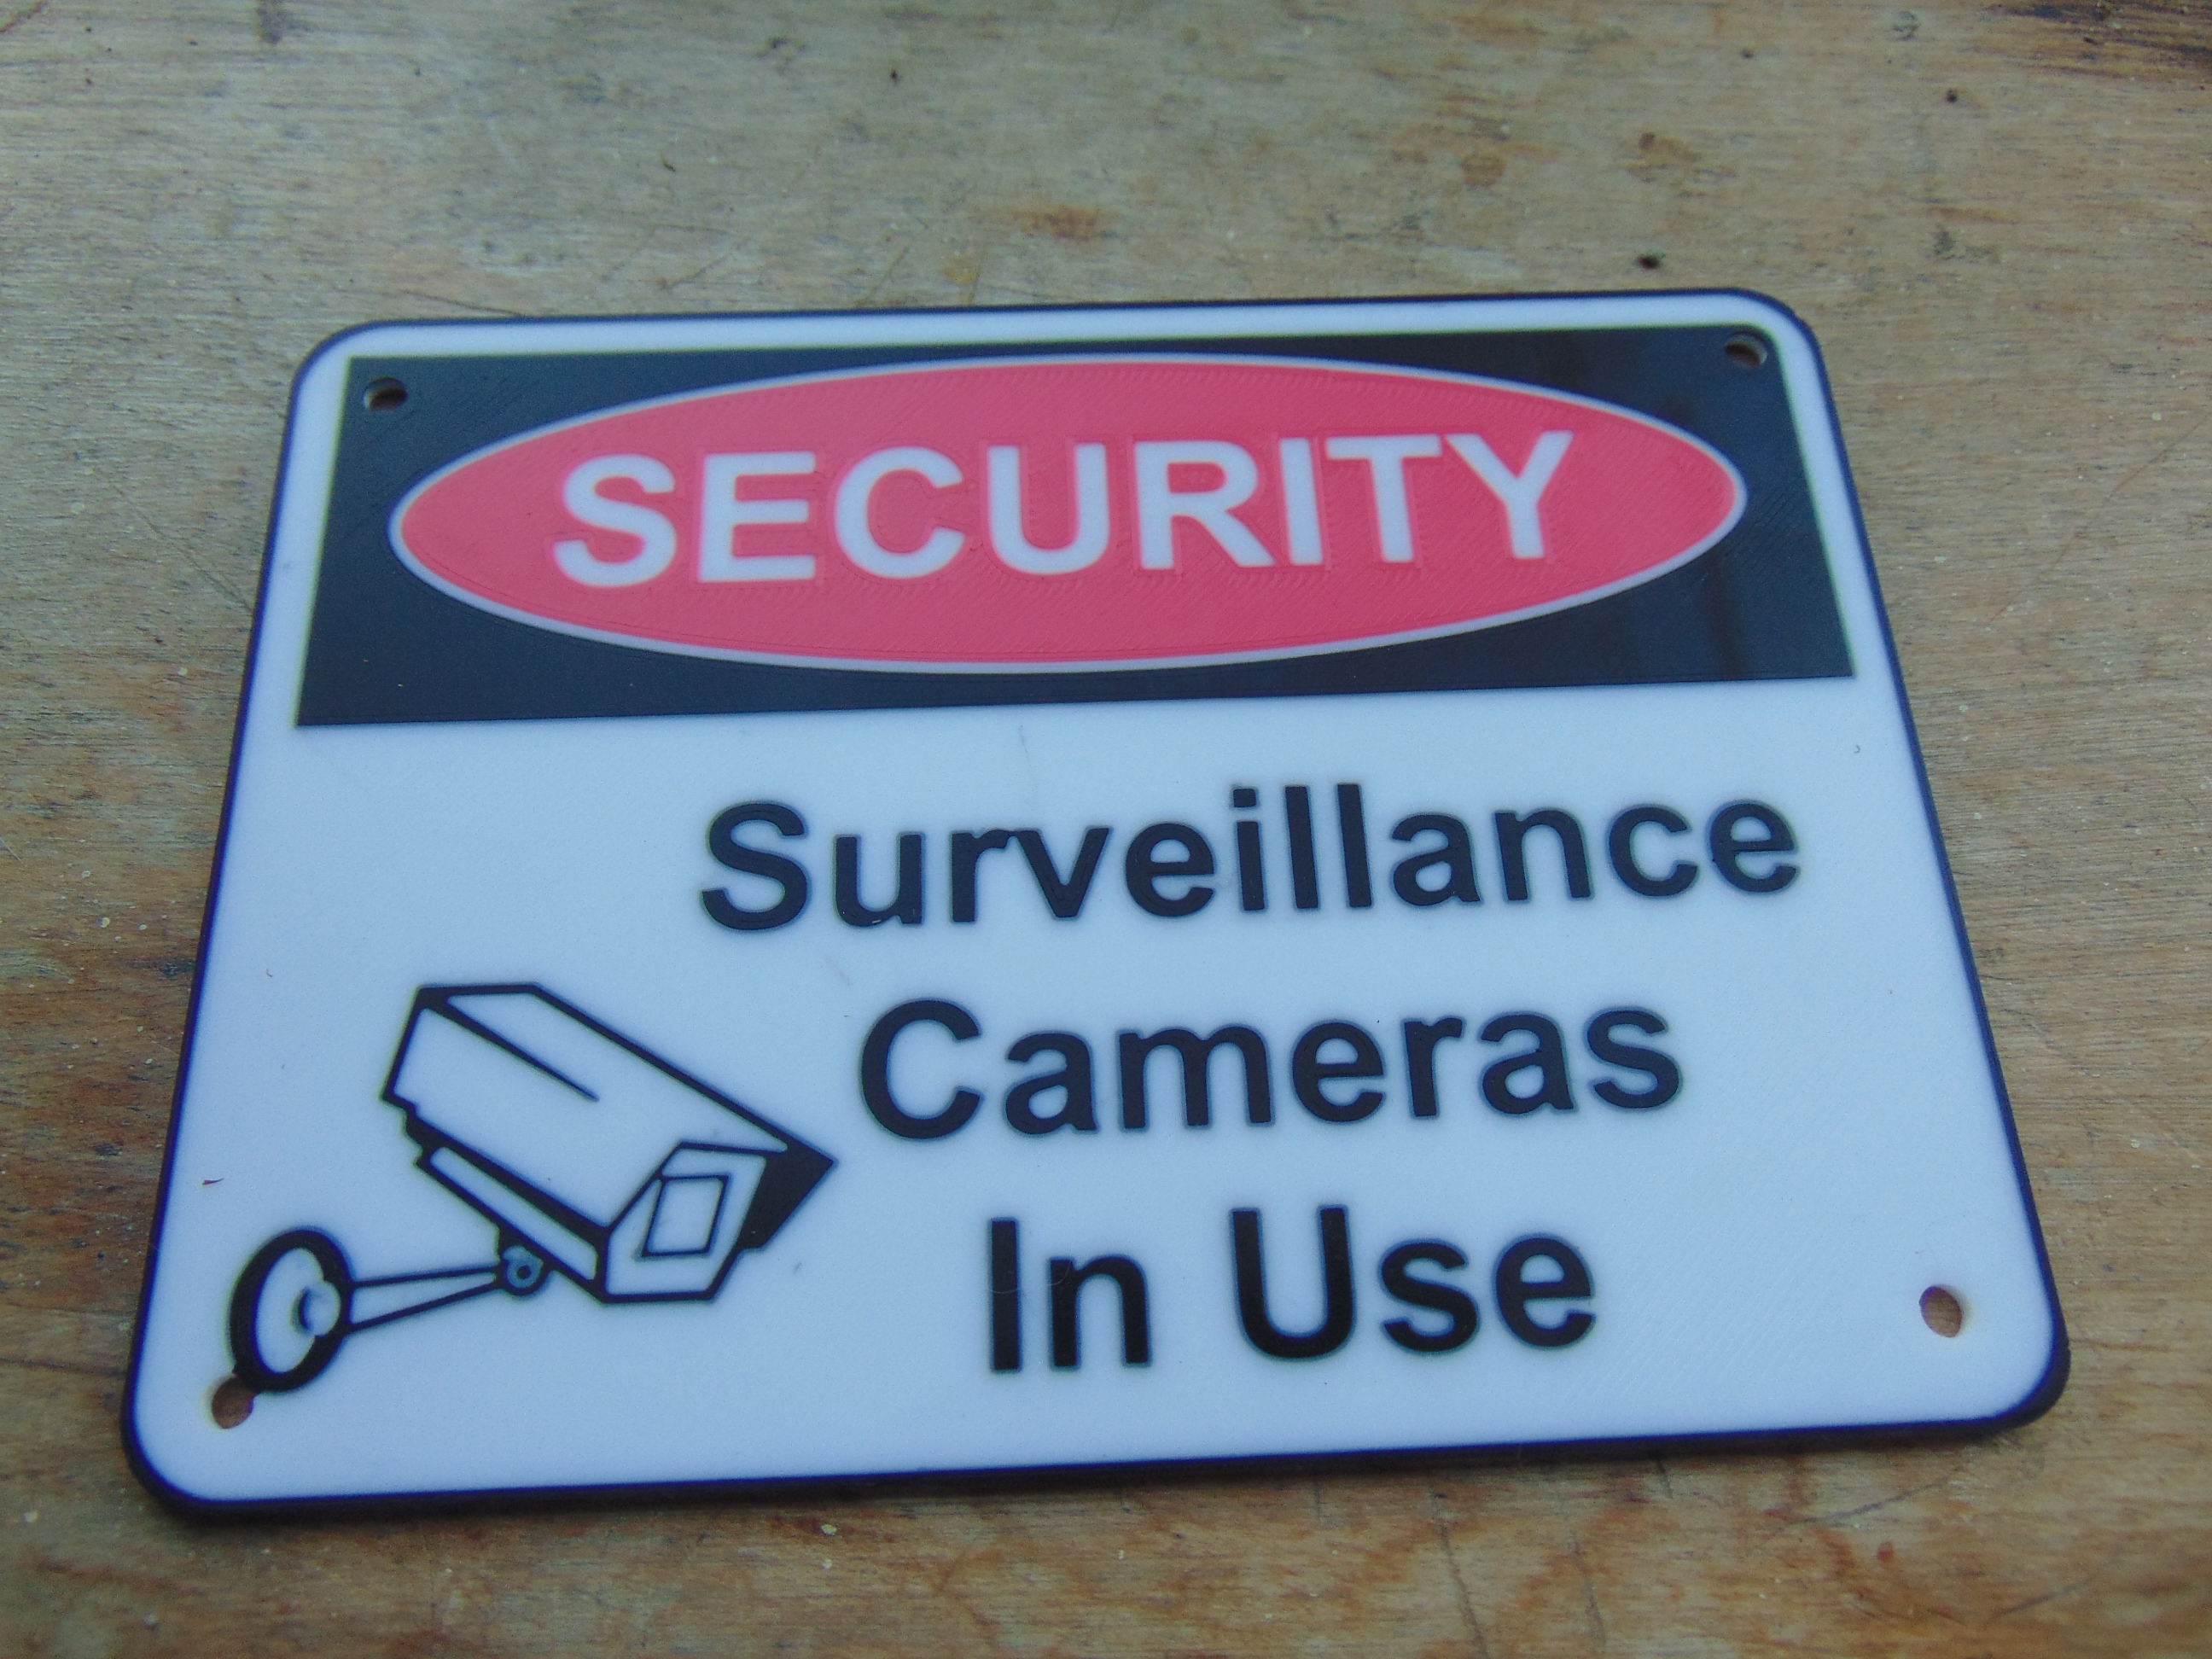 Security Camera Warning Sign